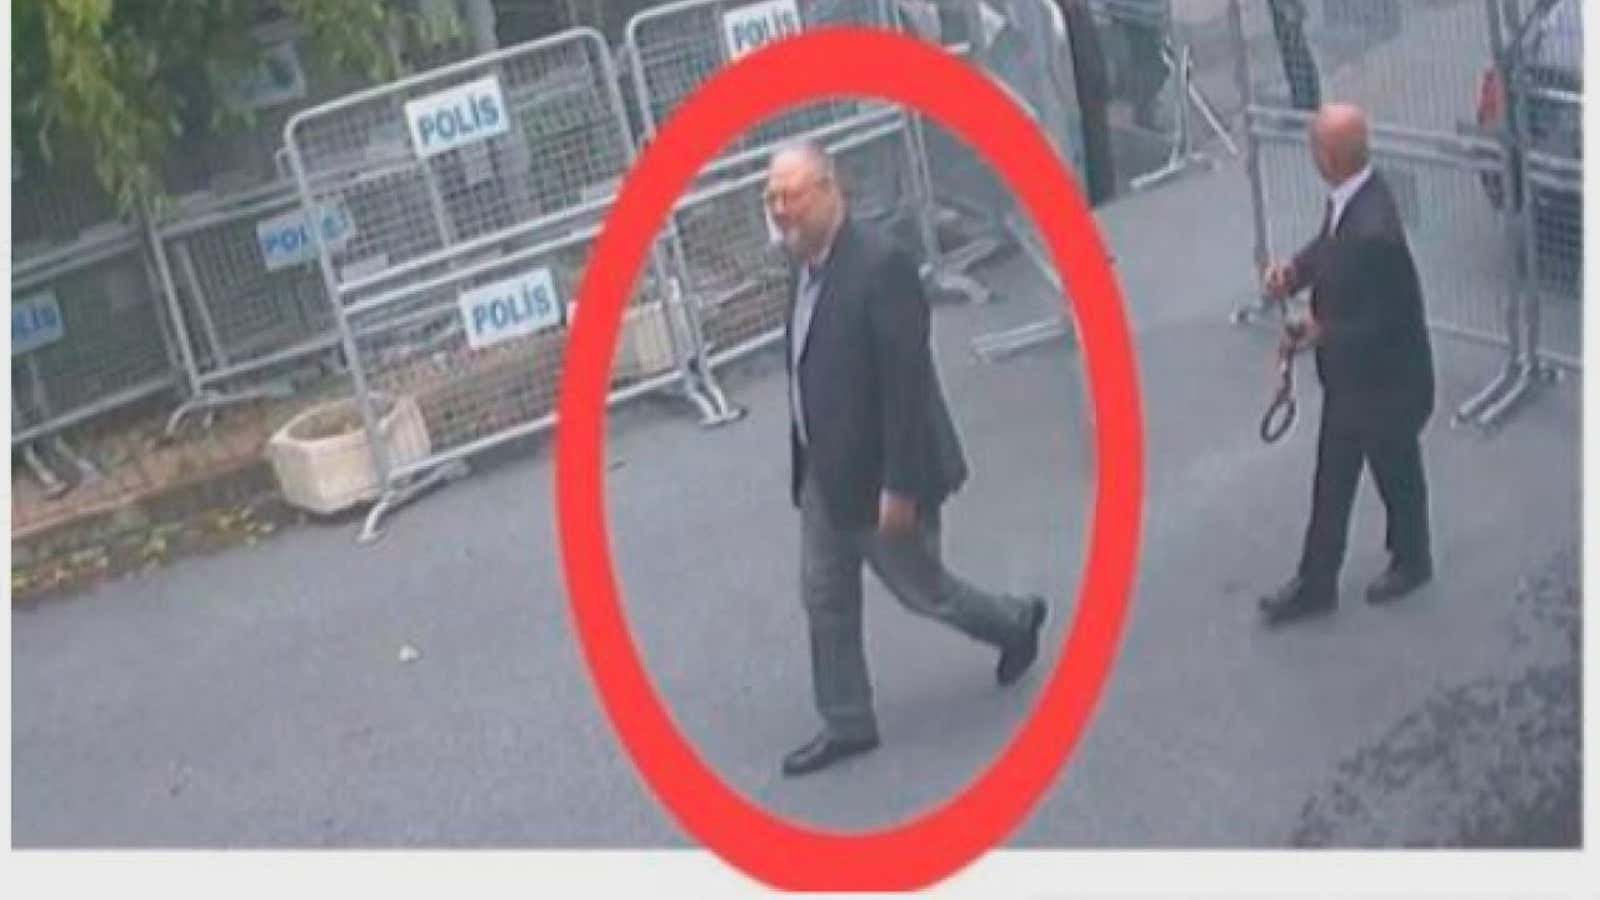 The real Jamal Khashoggi, entering the consulate.